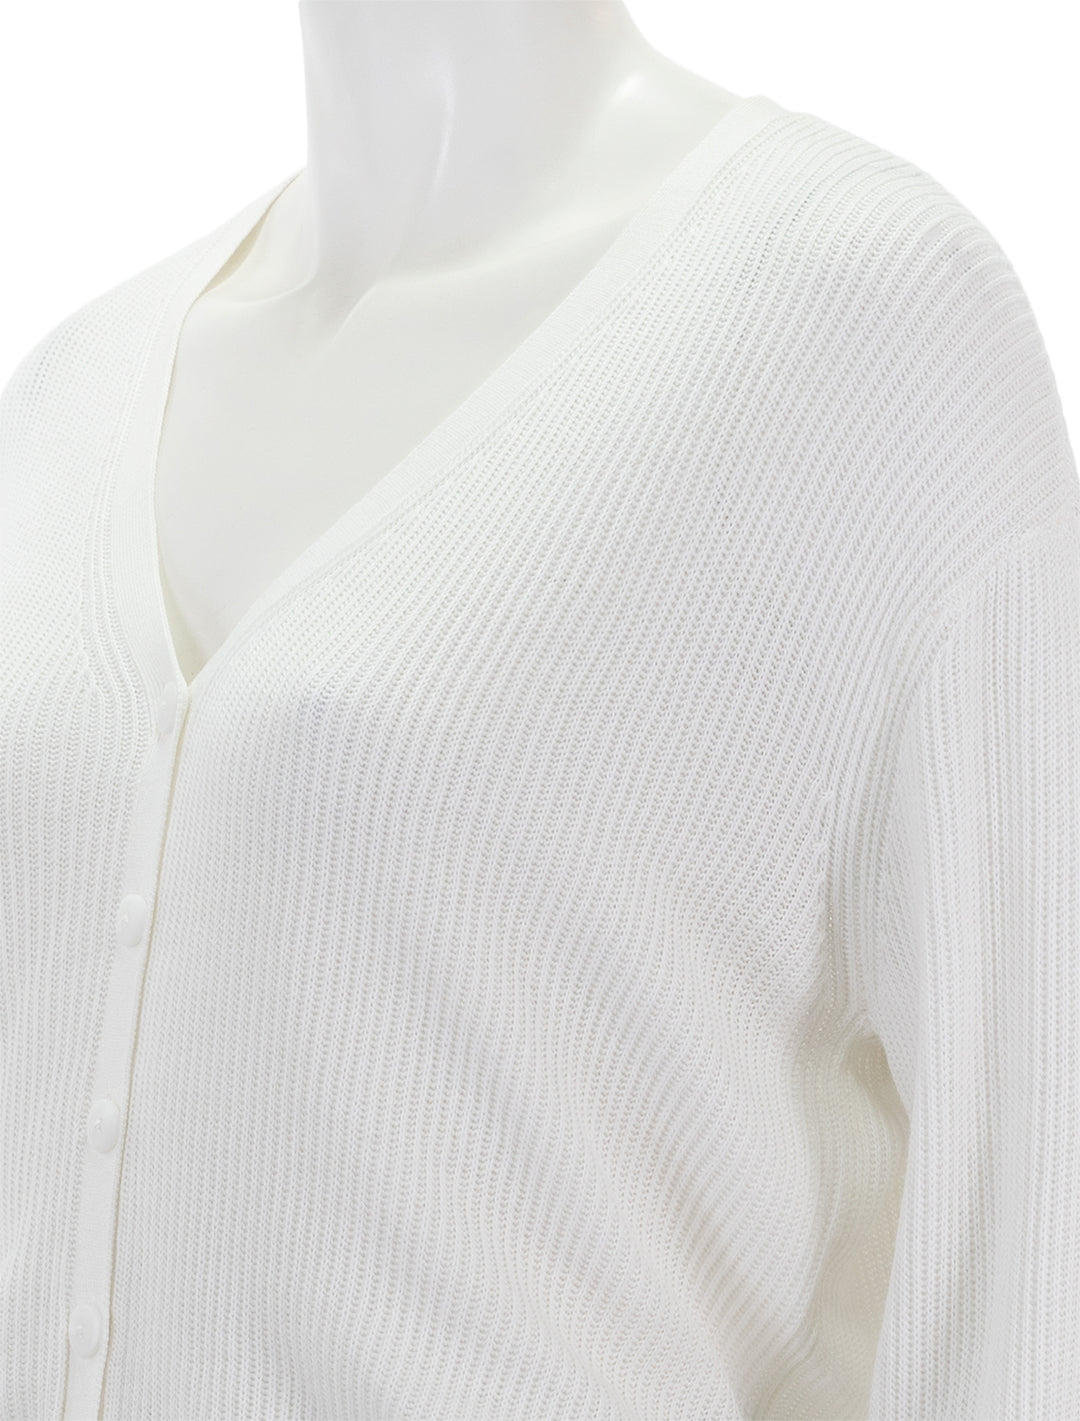 Close-up view of Splendid's bri cardigan in white.